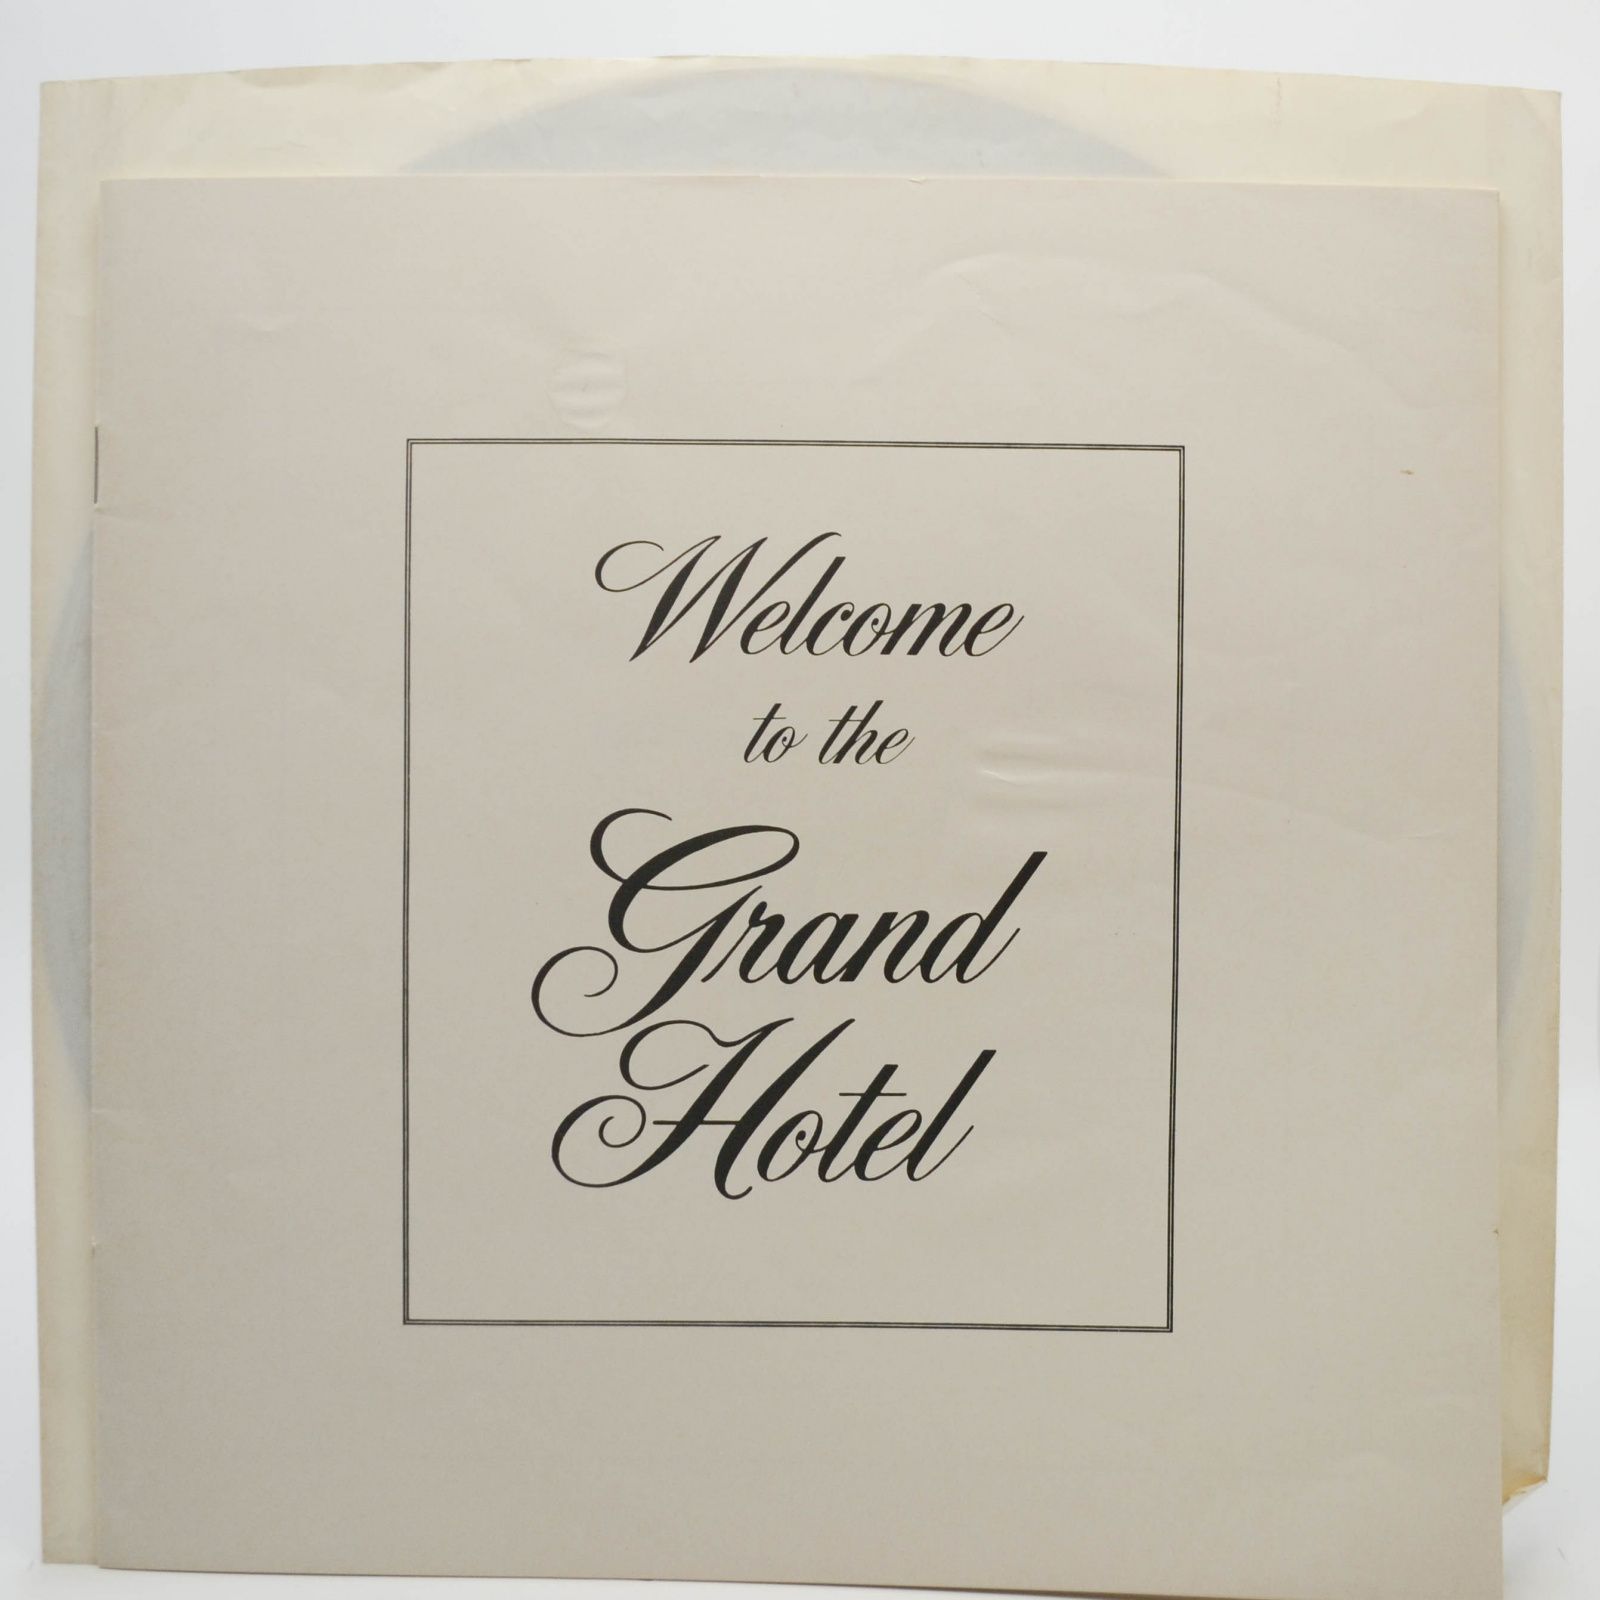 Procol Harum — Grand Hotel (booklet), 1973